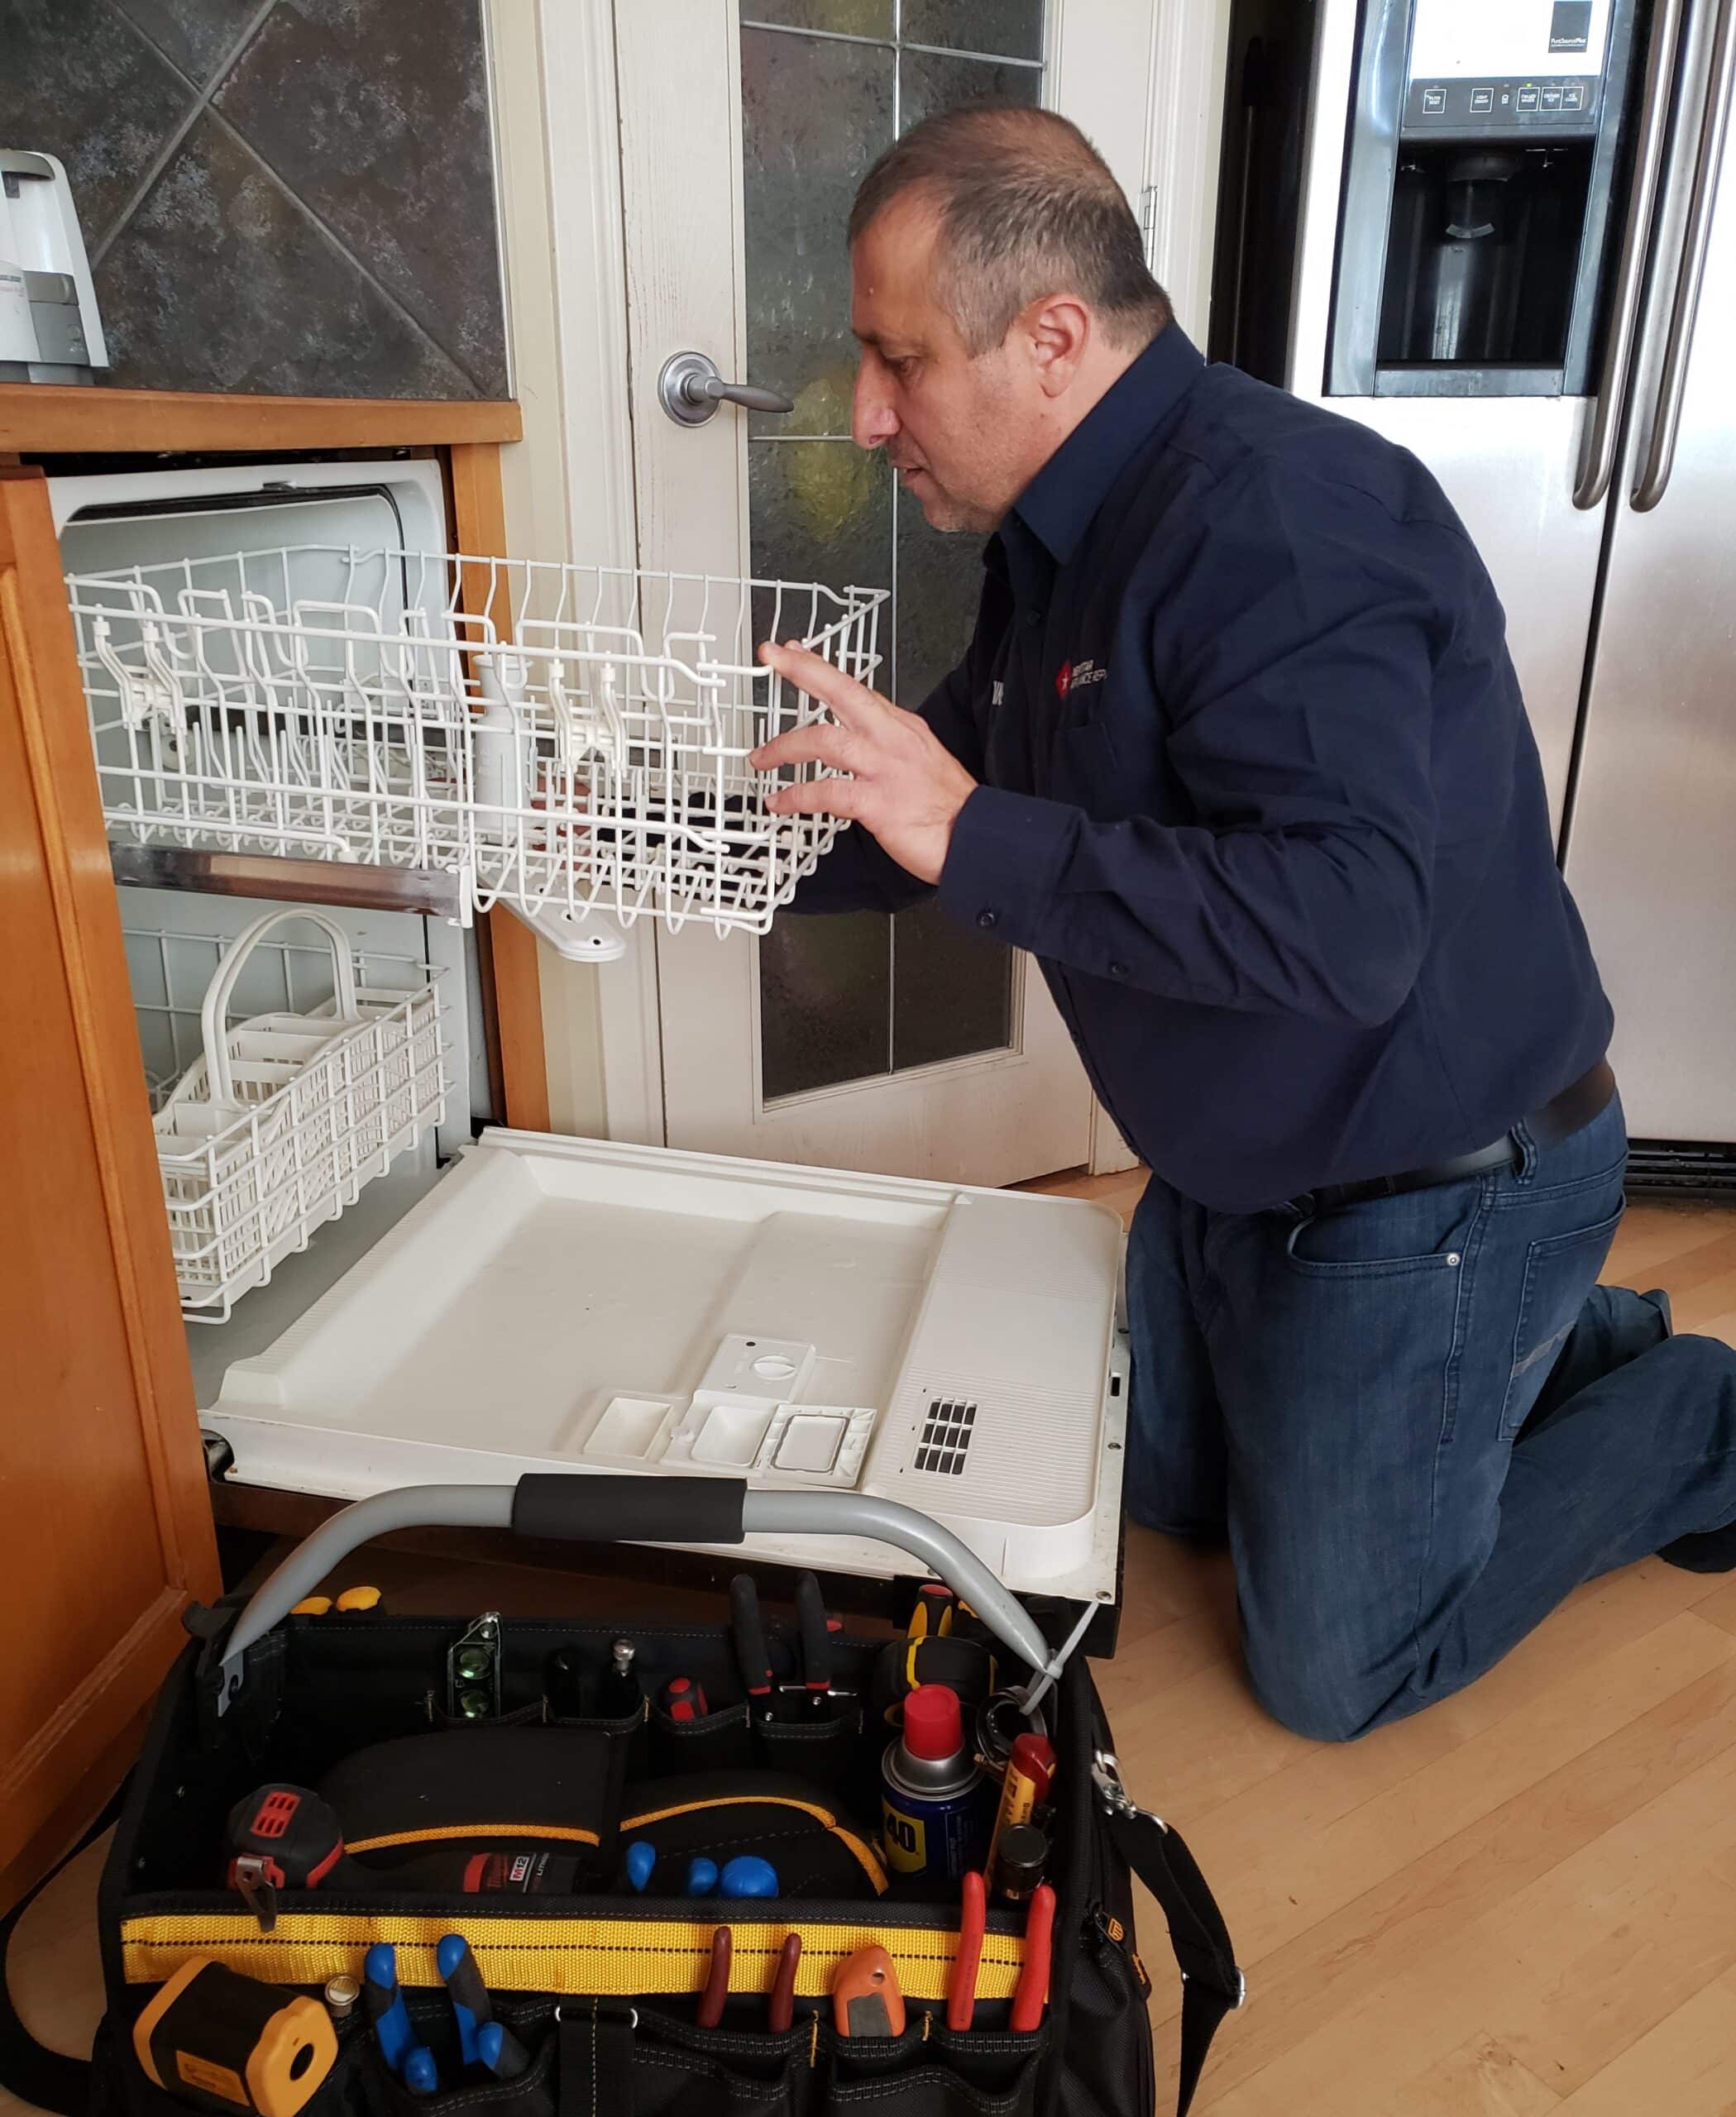 Dishwasher Repair Service in Calgary